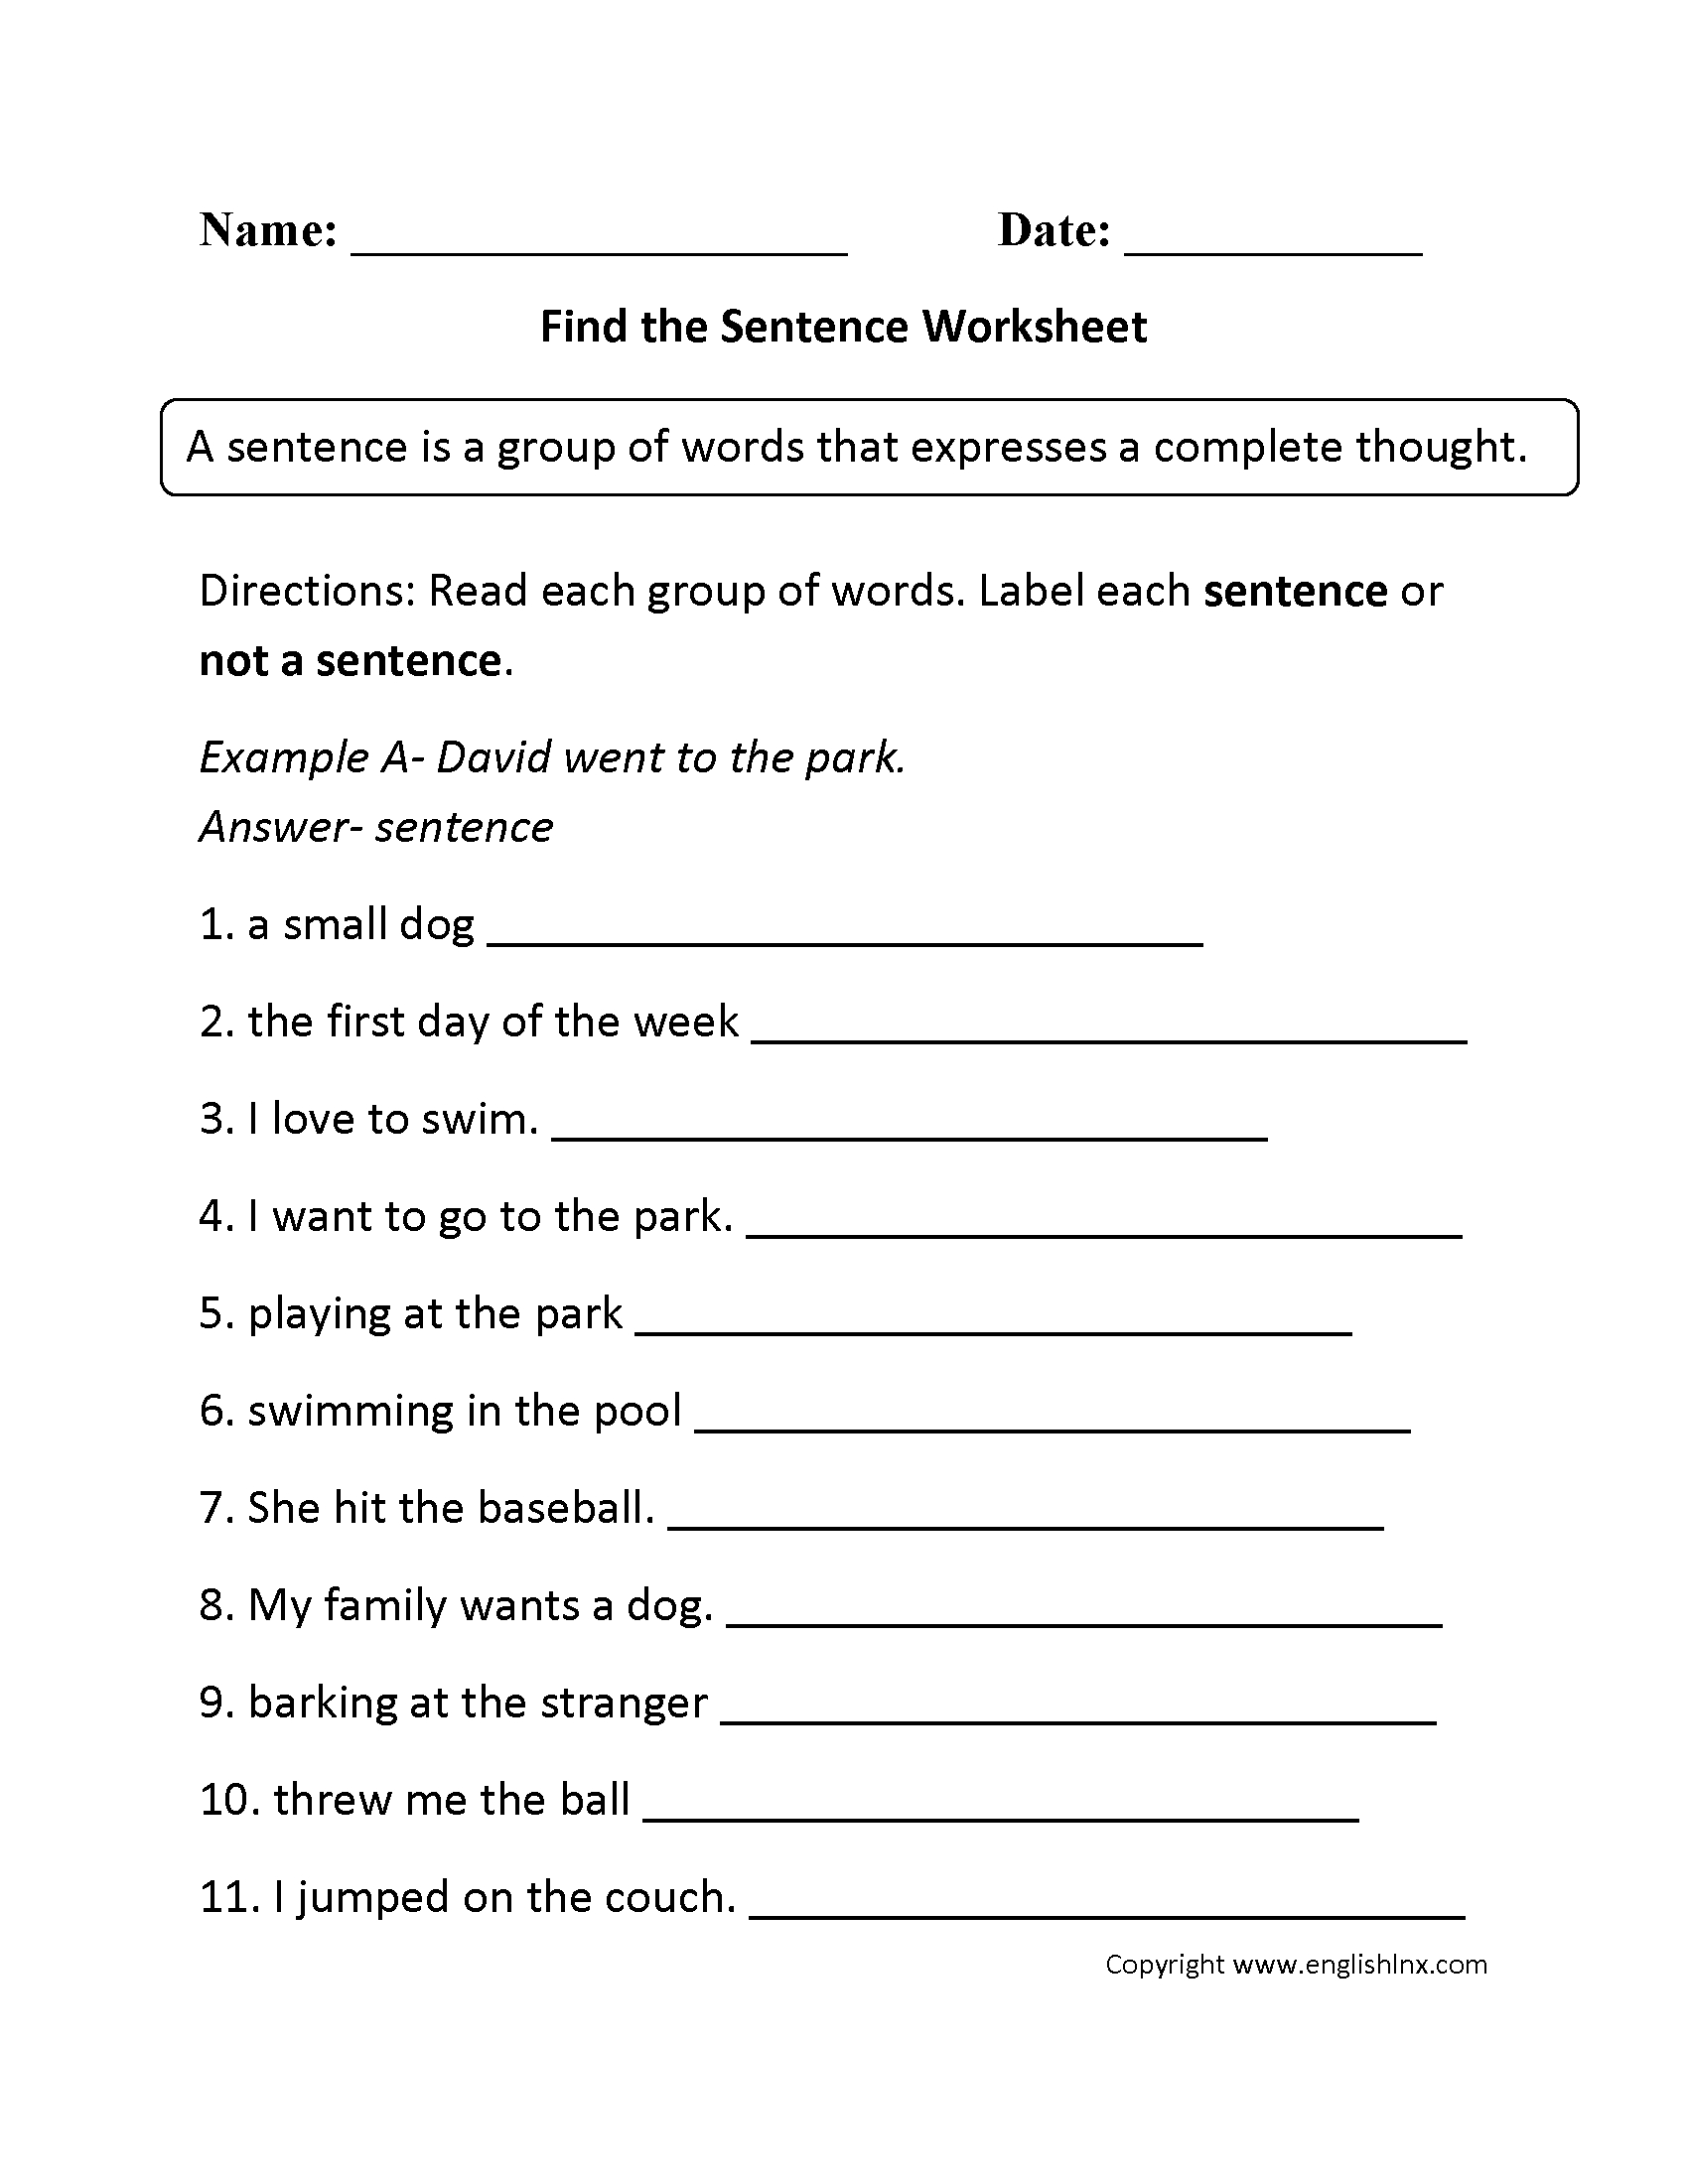 sentence-structure-1-esl-worksheets-of-the-day-pinterest-sentence